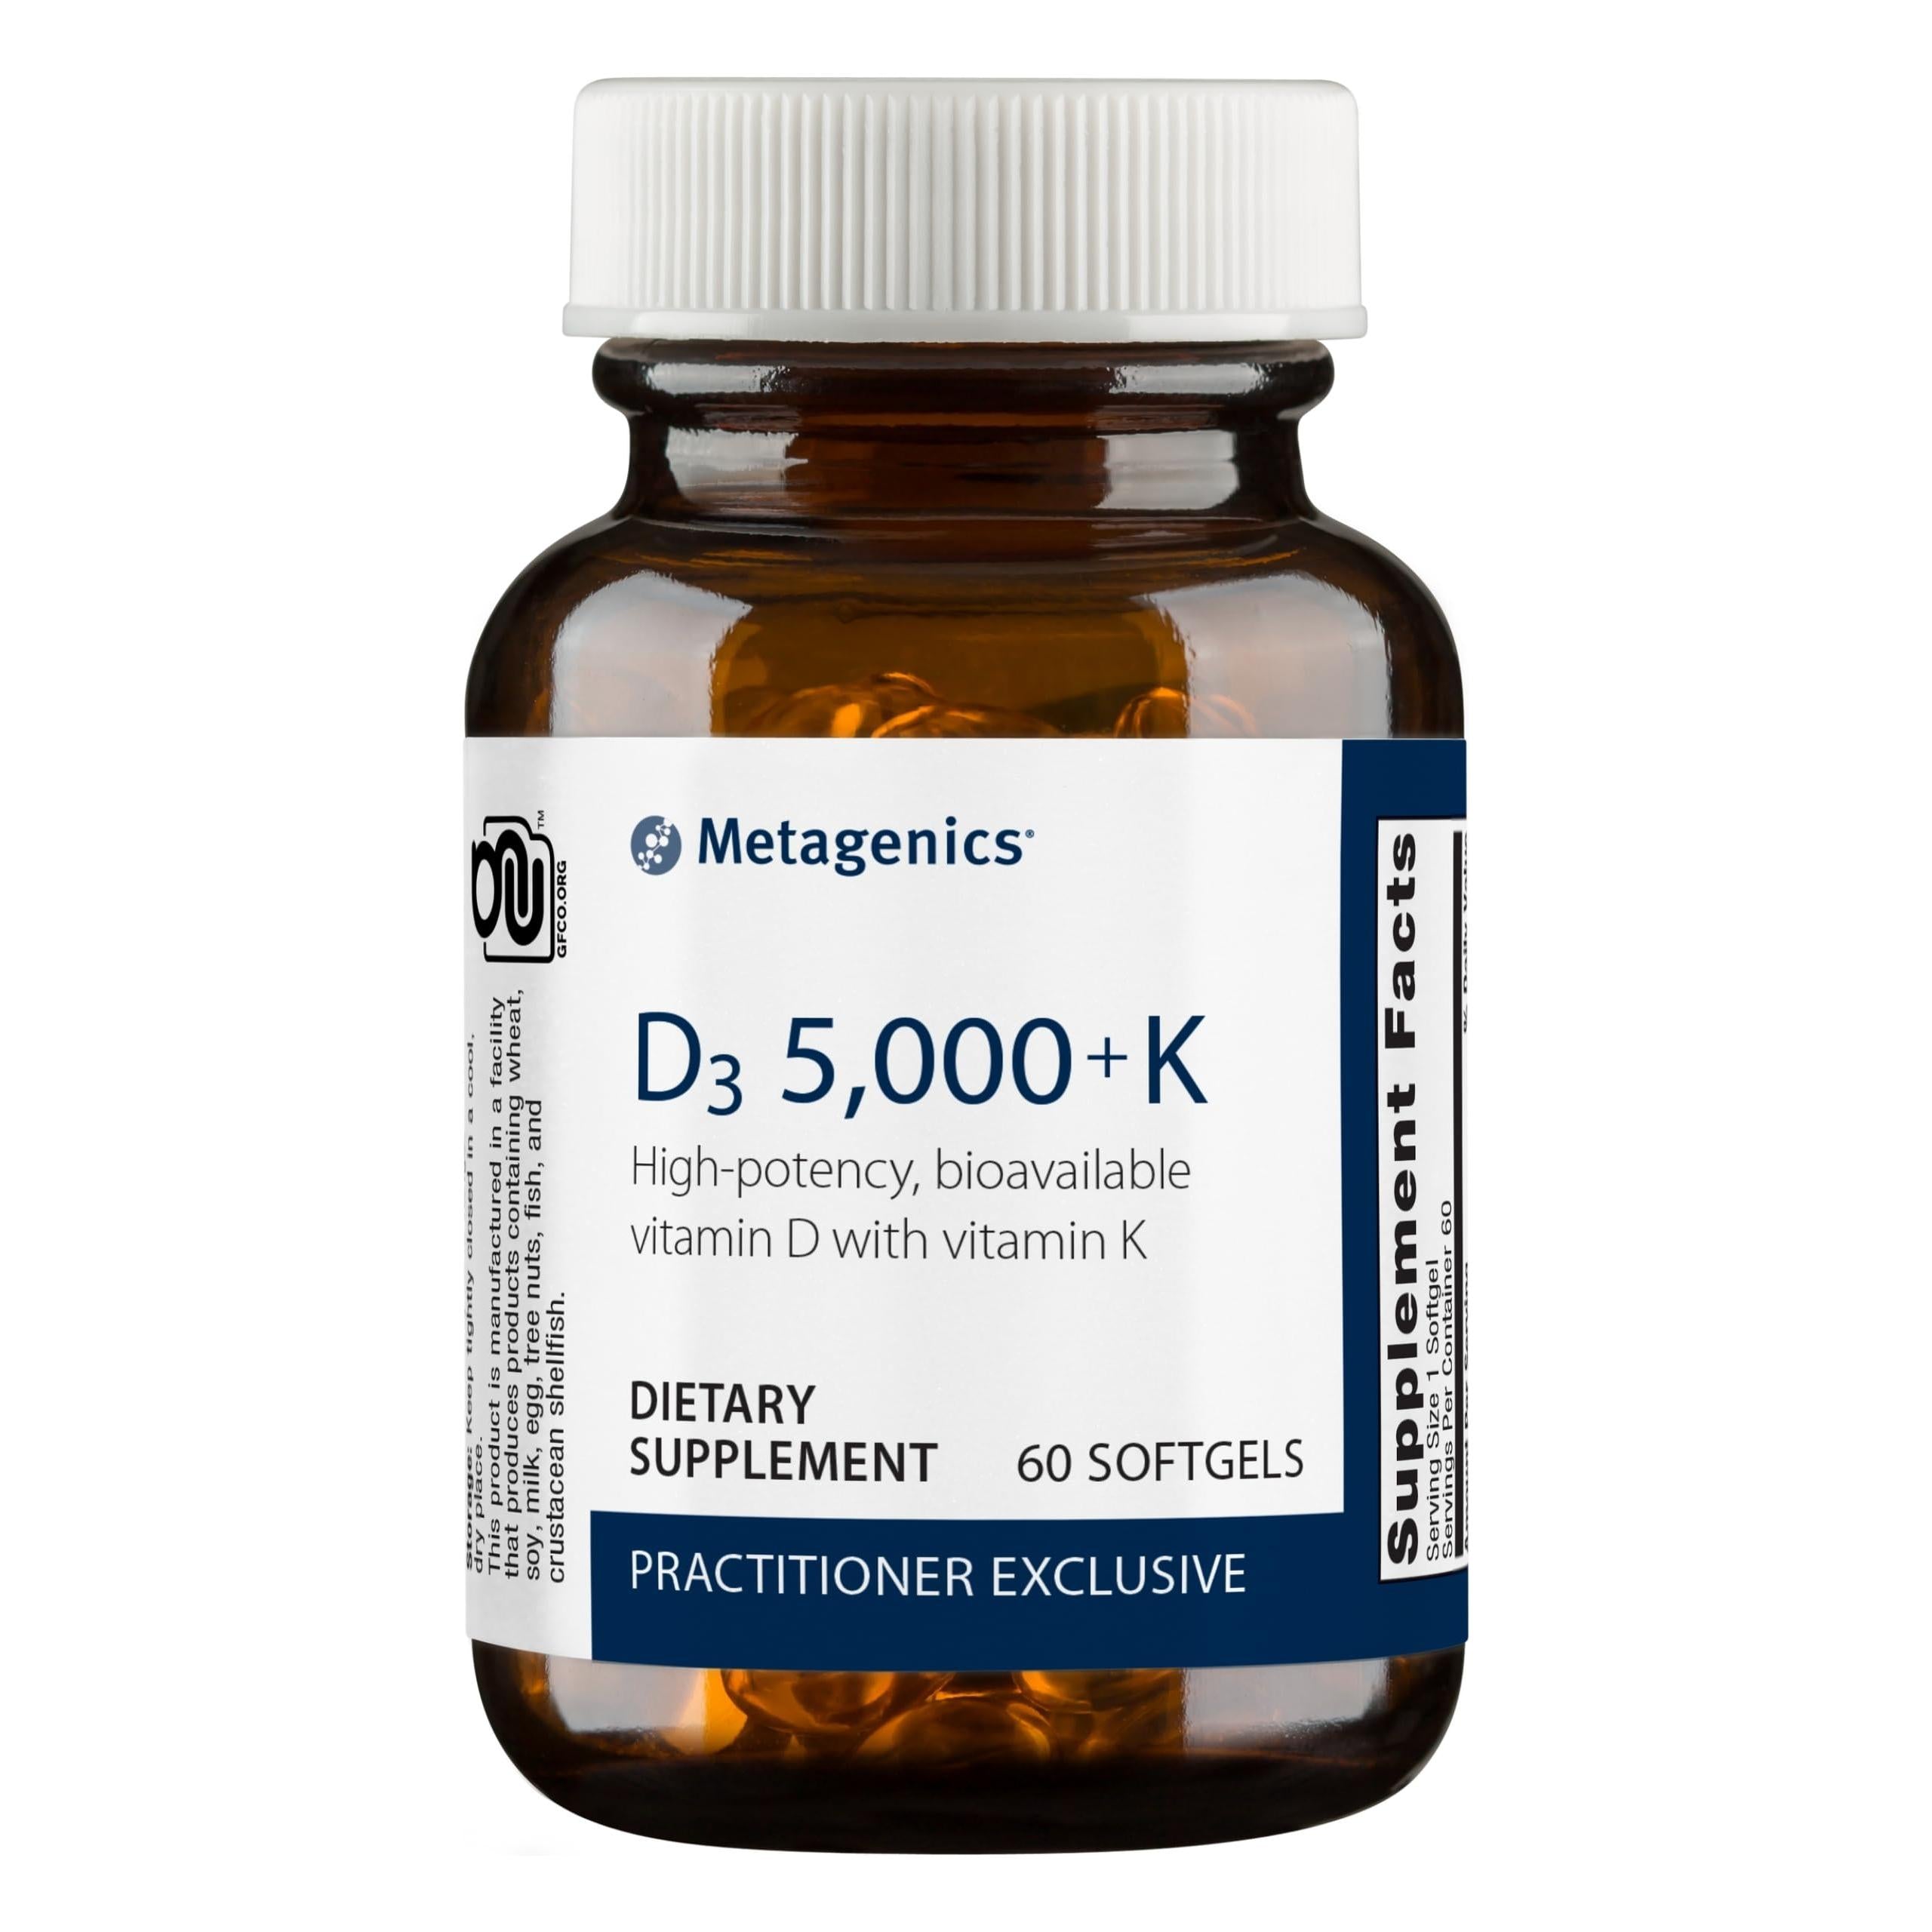 Metagenics D3 5,000 + K - for Immune Support, Bone Health &amp; Heart Health* - Vitamin D with MK-7 (Vitamin K2) - Non-GMO - Gluten-Free - 60 Softgels